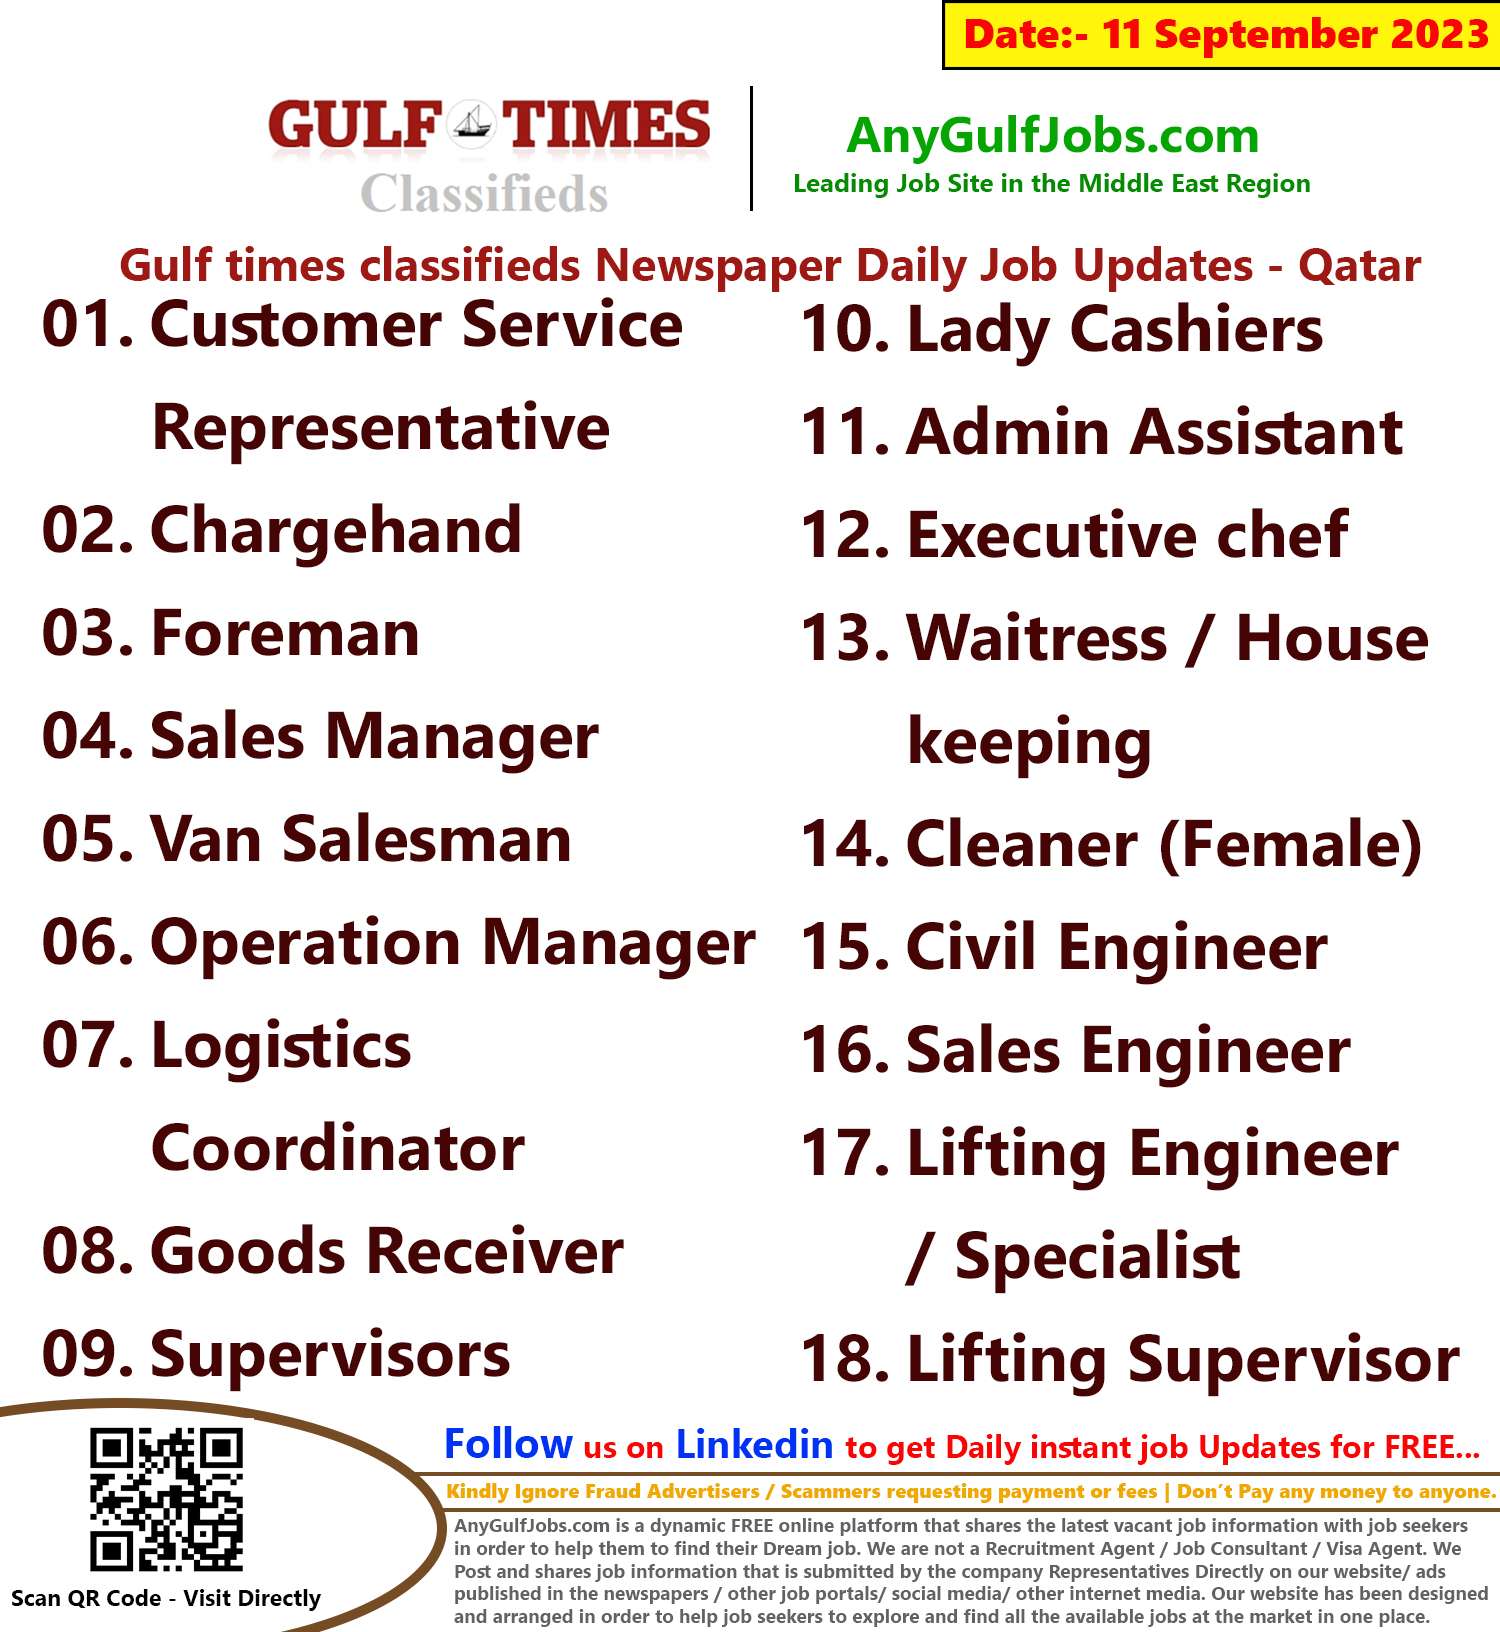 Gulf times classifieds Job Vacancies Qatar - 11 September 2023